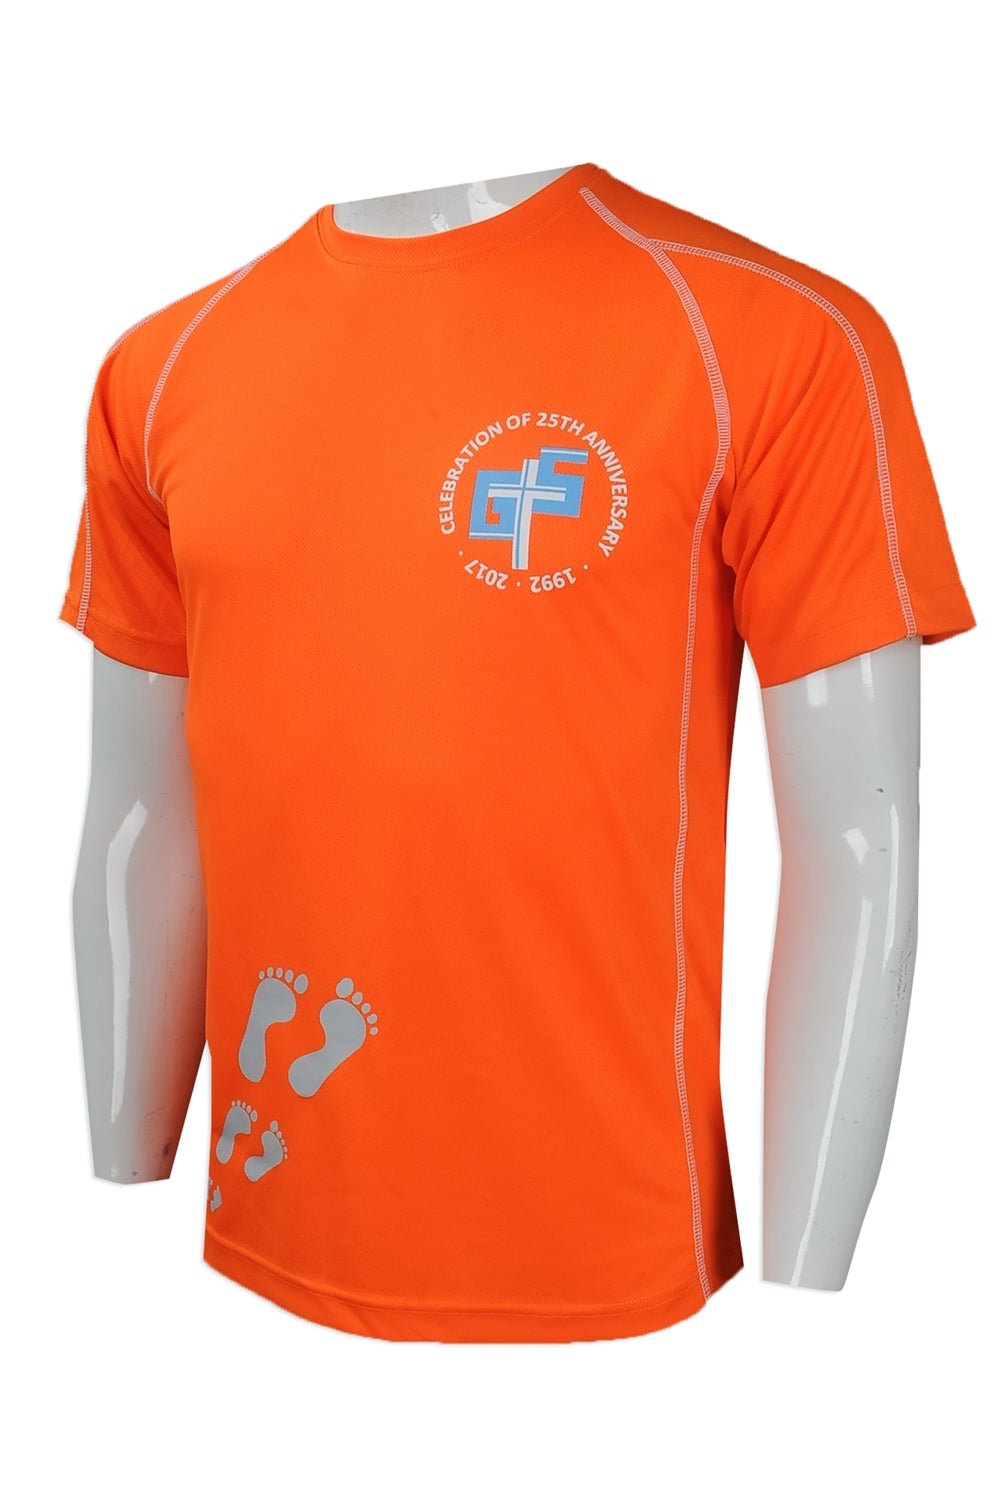 W207 訂製個人功能性運動衫 自製logo款功能性運動衫香港 蝦蘇線 週年紀念活動T恤 功能性運動衫專營店 橙色